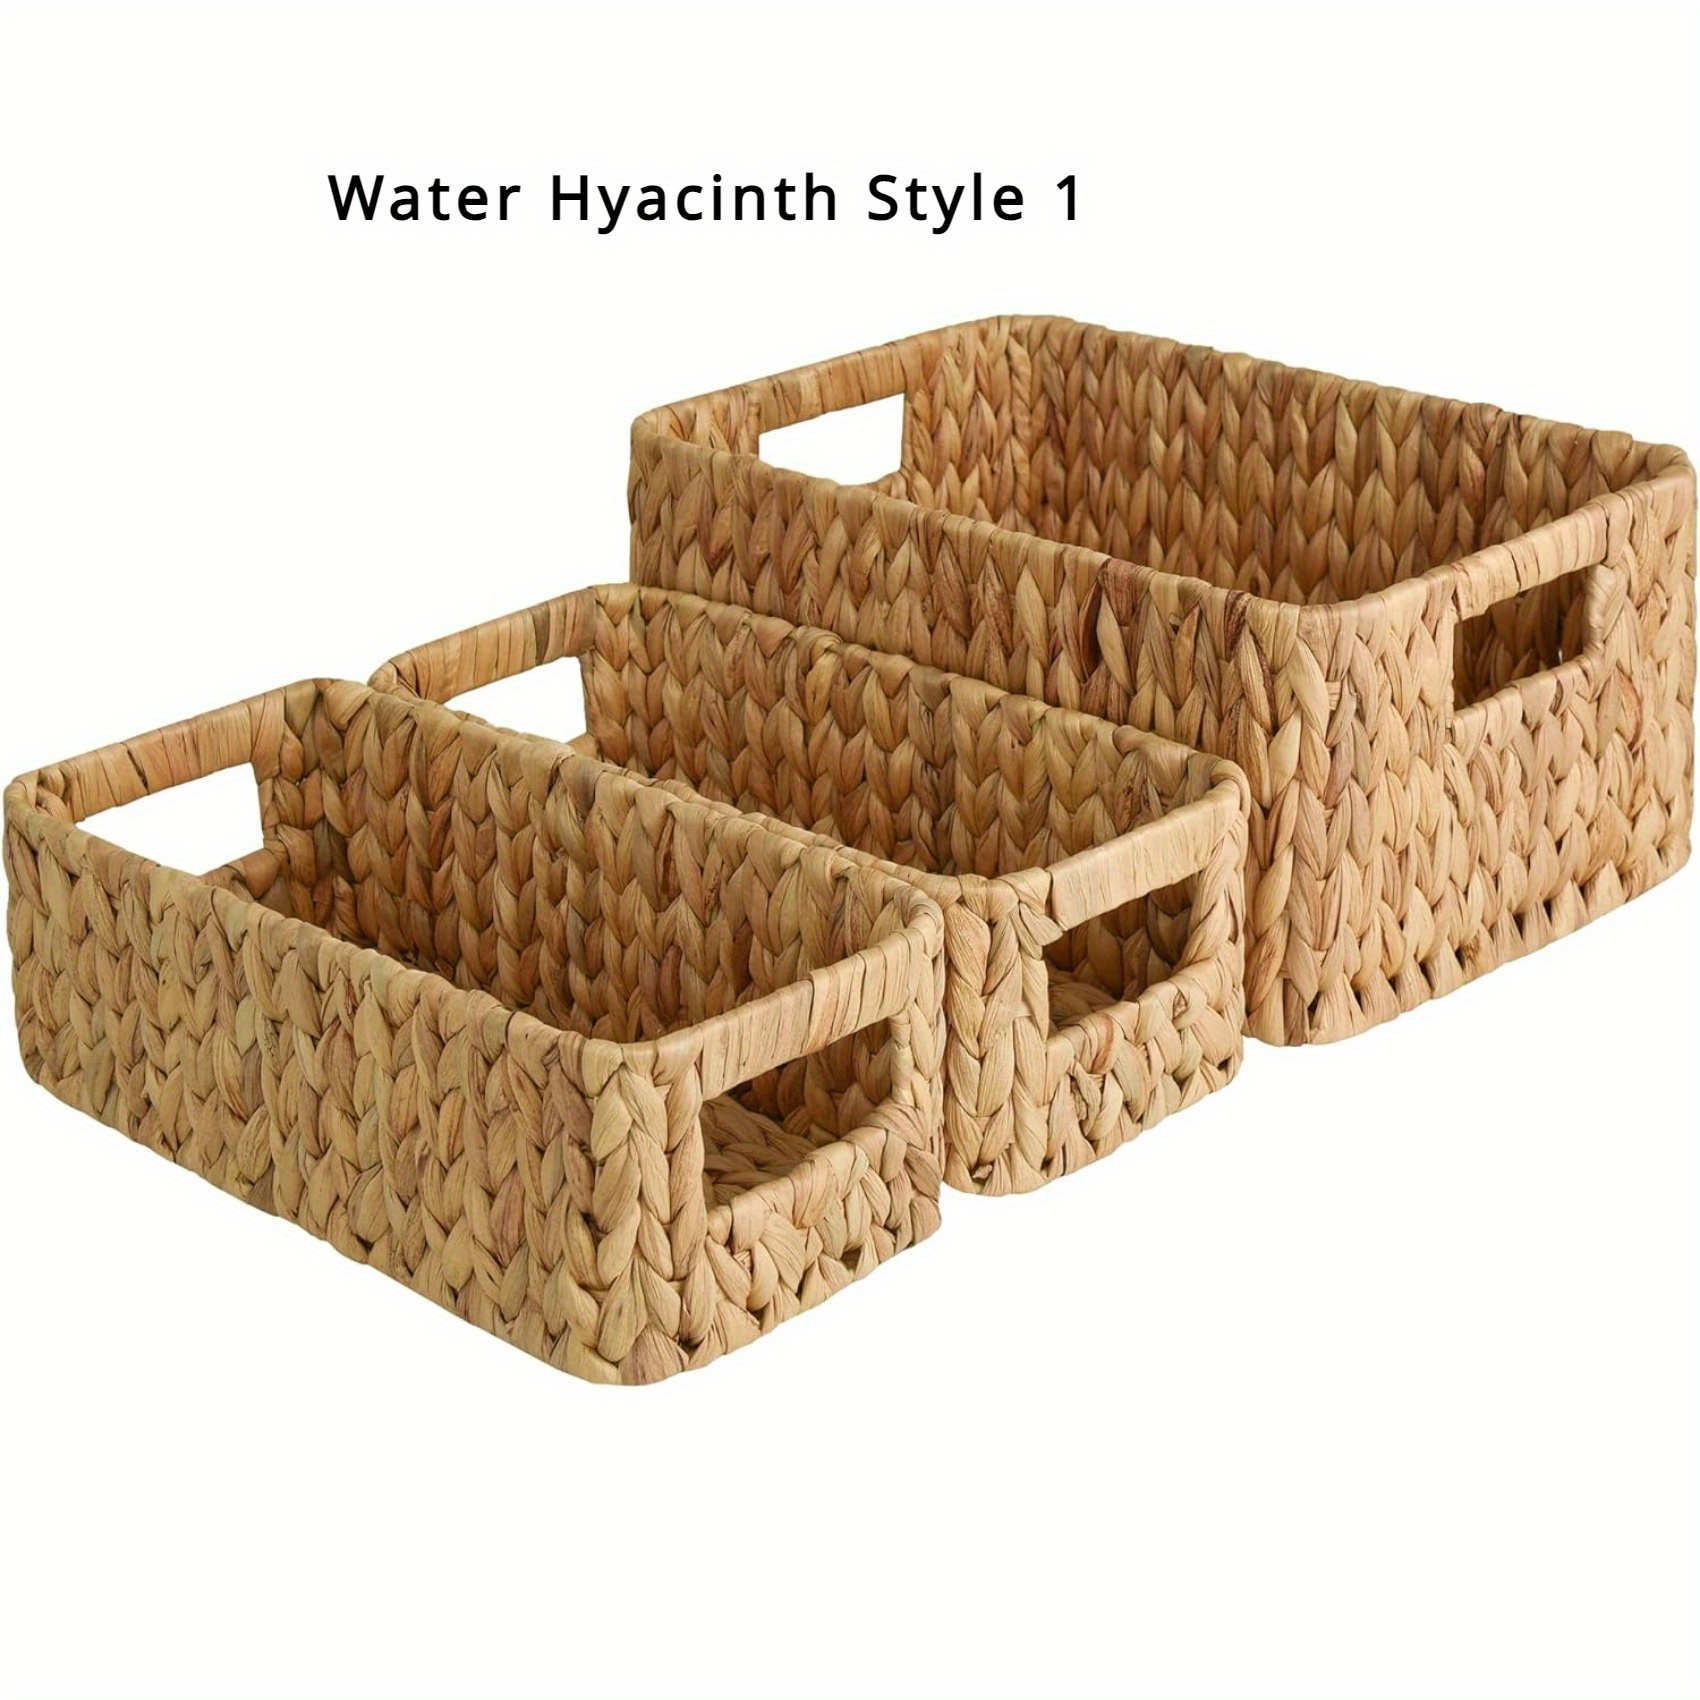 

Baskets For Shelves, Water Hyacinth Storage Baskets For Organizing, Wicker Basket For Bathroom Set Of 3 (1pc Large, 2pcs Medium)